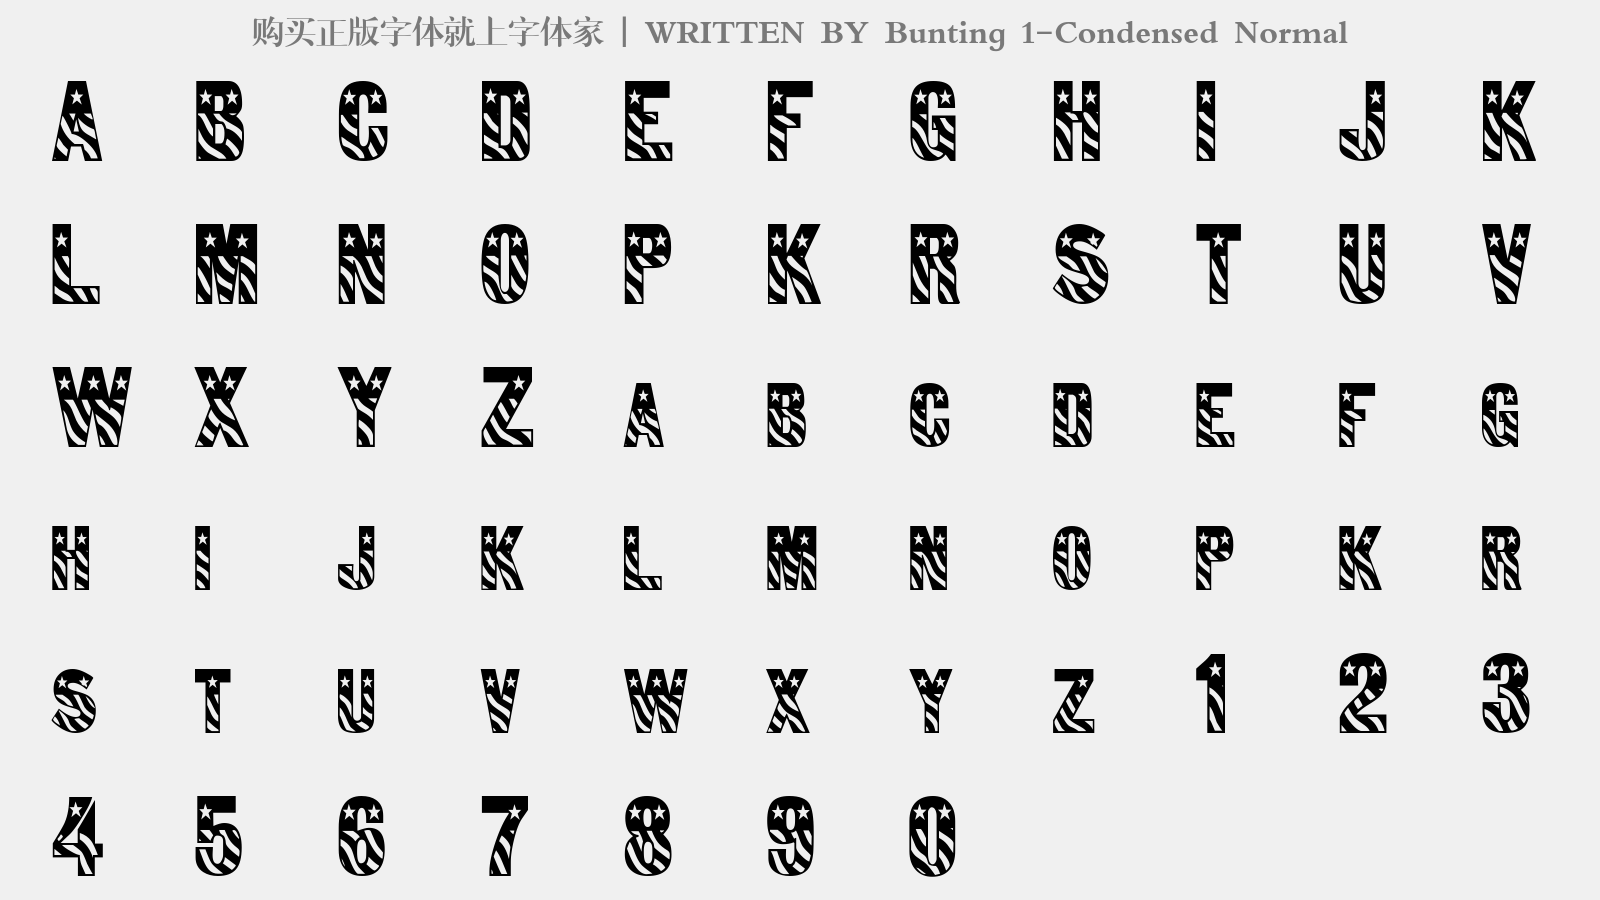 Bunting 1-Condensed Normal - 大写字母/小写字母/数字